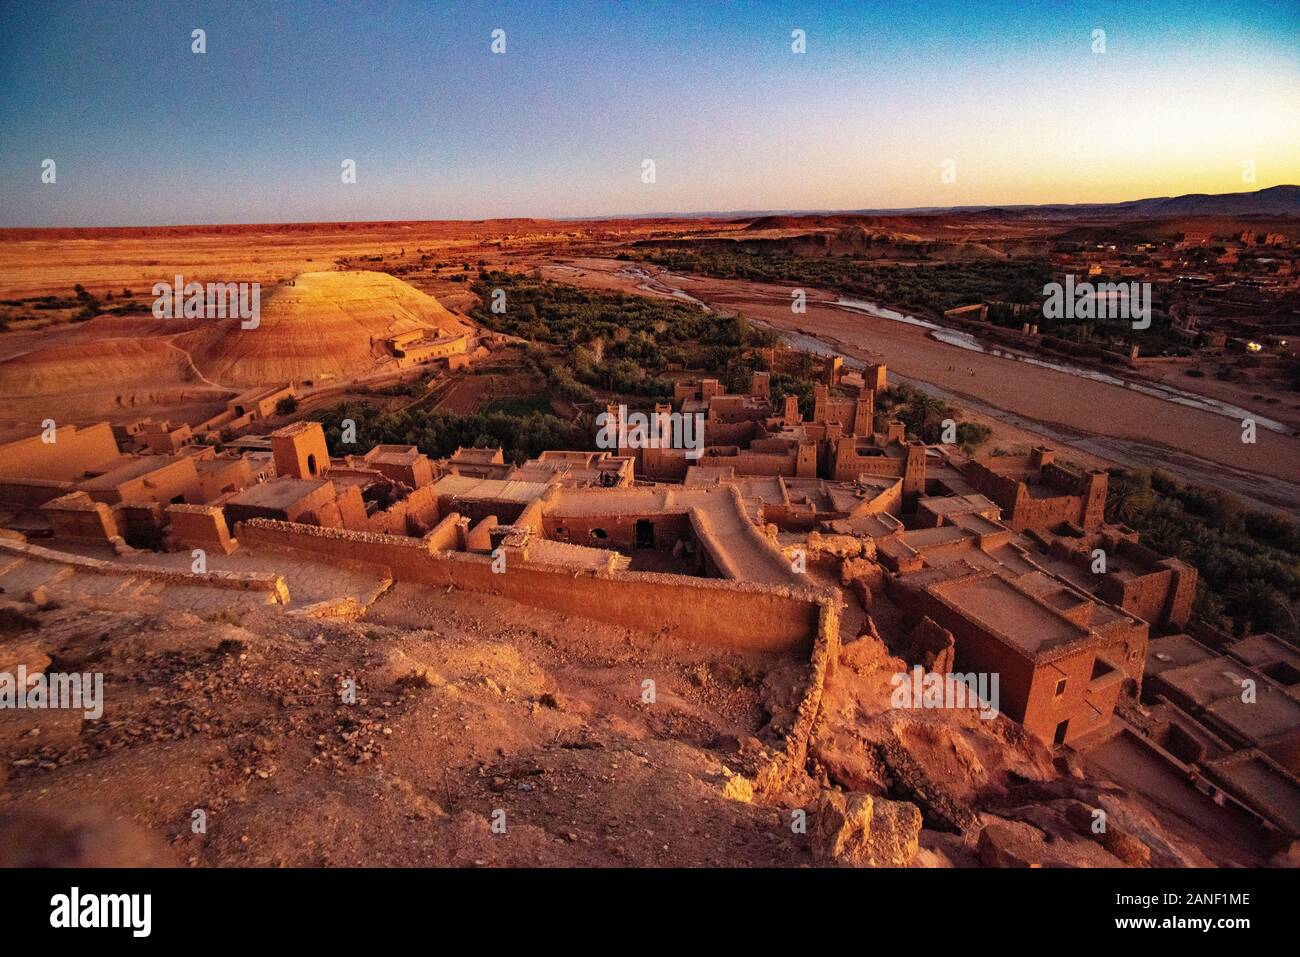 ait ben haddou town i morocoo pretected by UNESCO Stock Photo